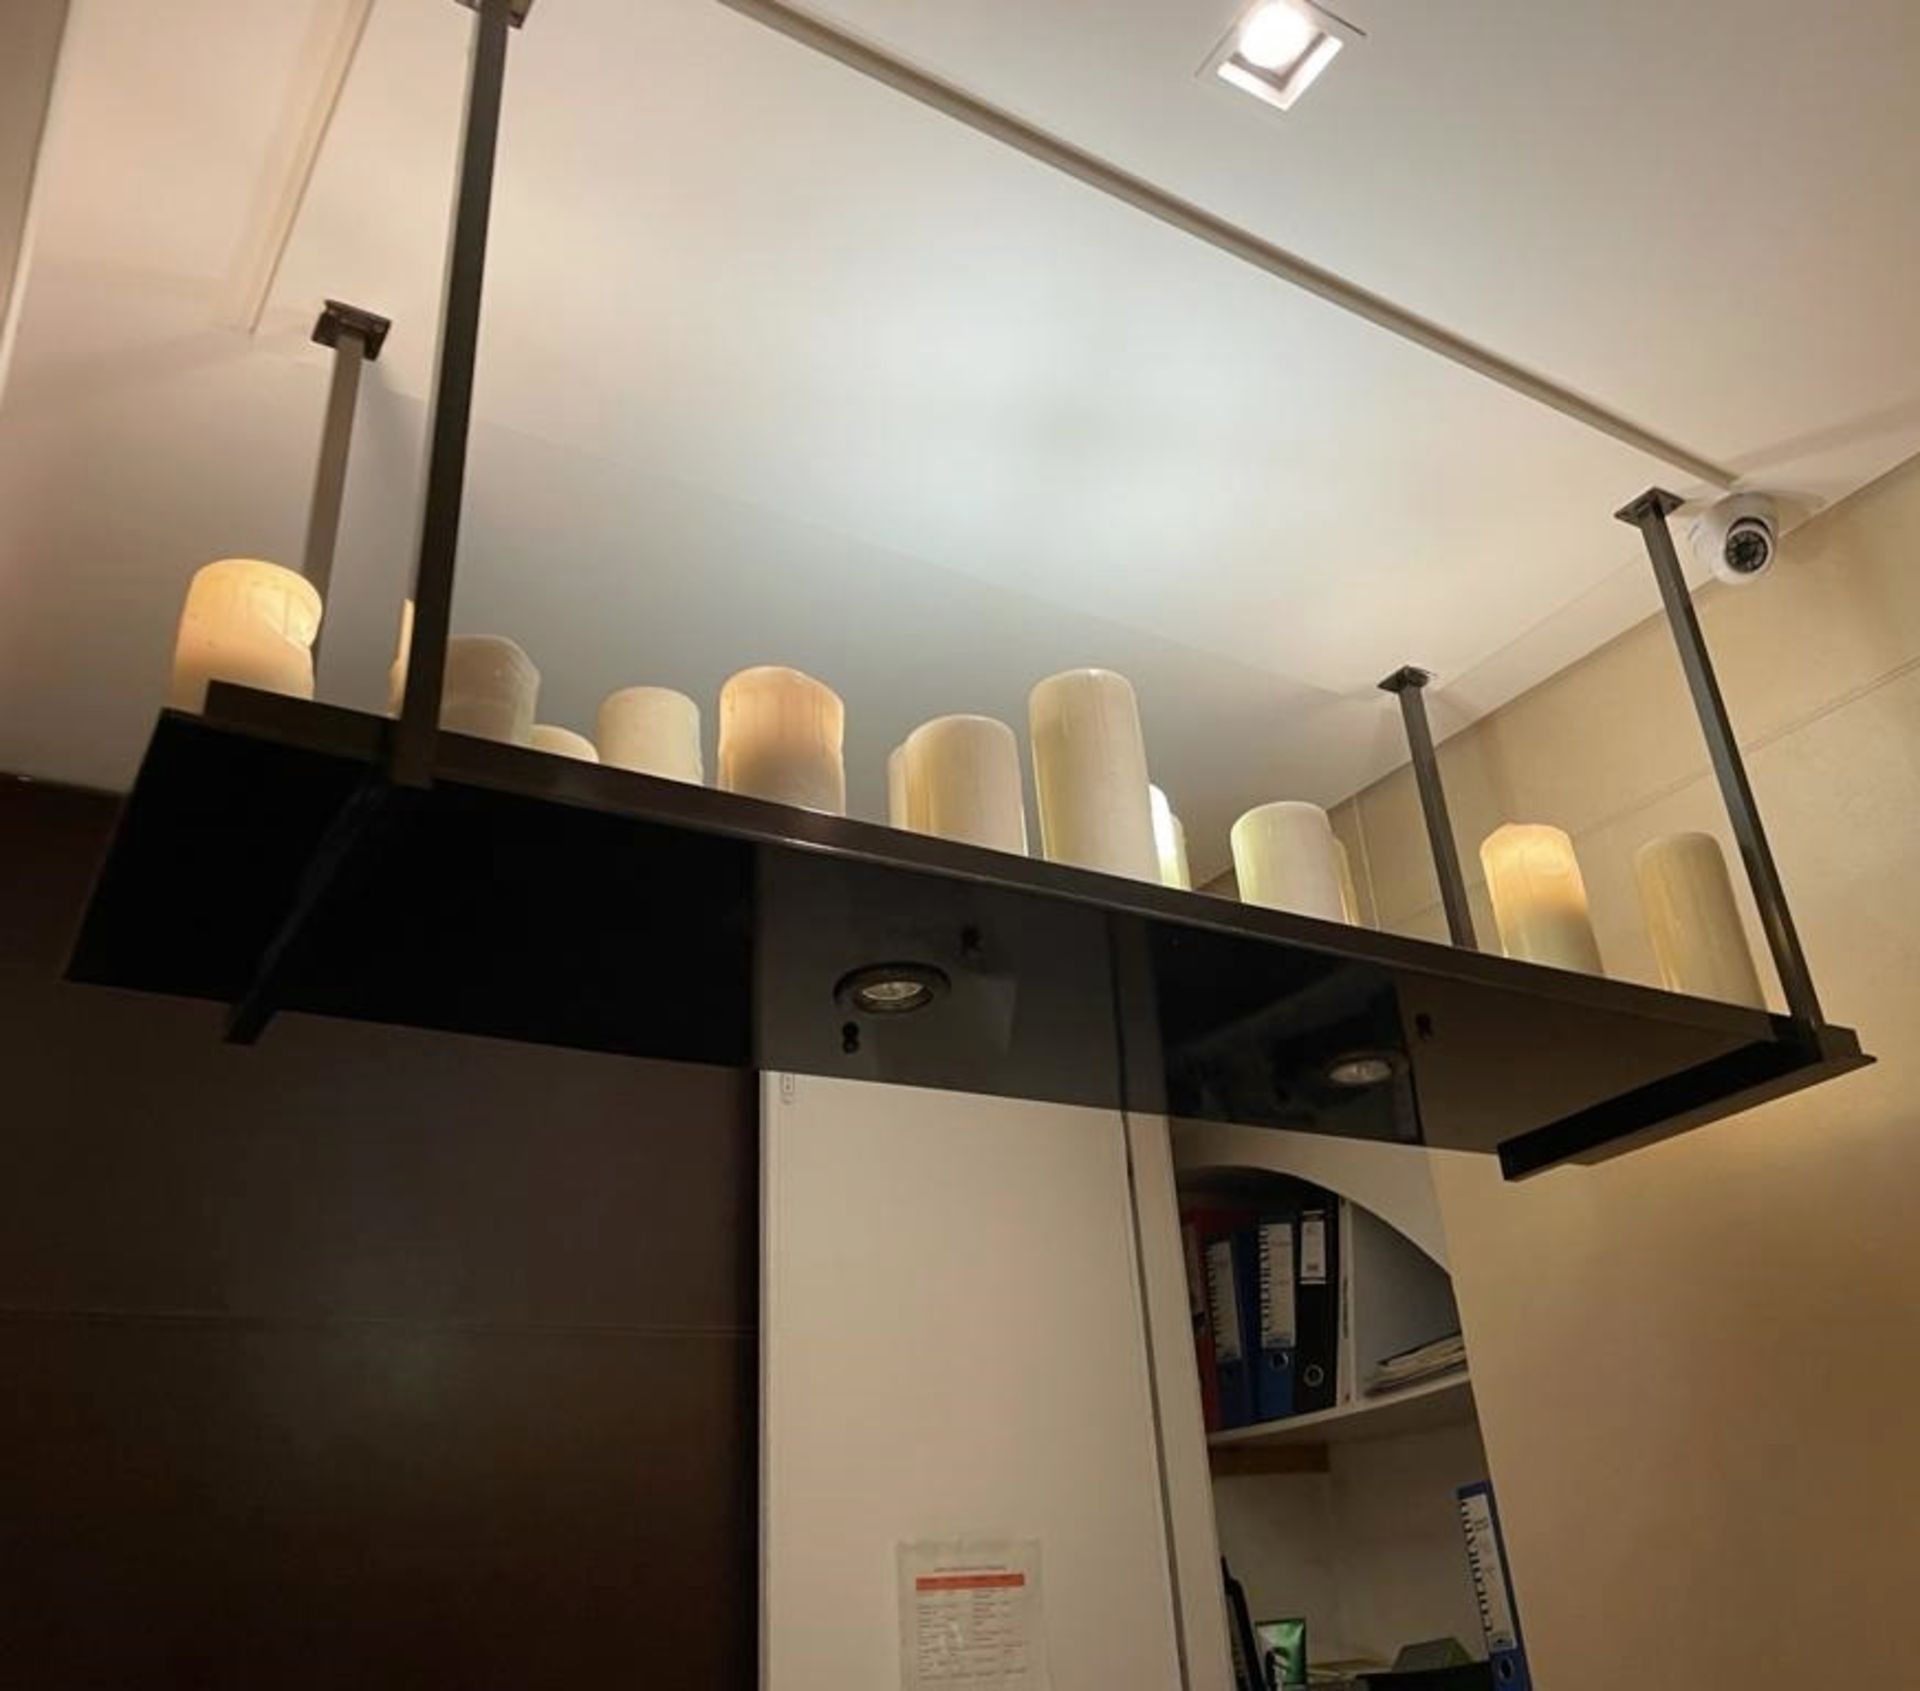 1 x Reception Desk With Ceiling Suspended Light Shelf - Desk Dimensions: W160 x D60.5 x H112cm - Image 3 of 6